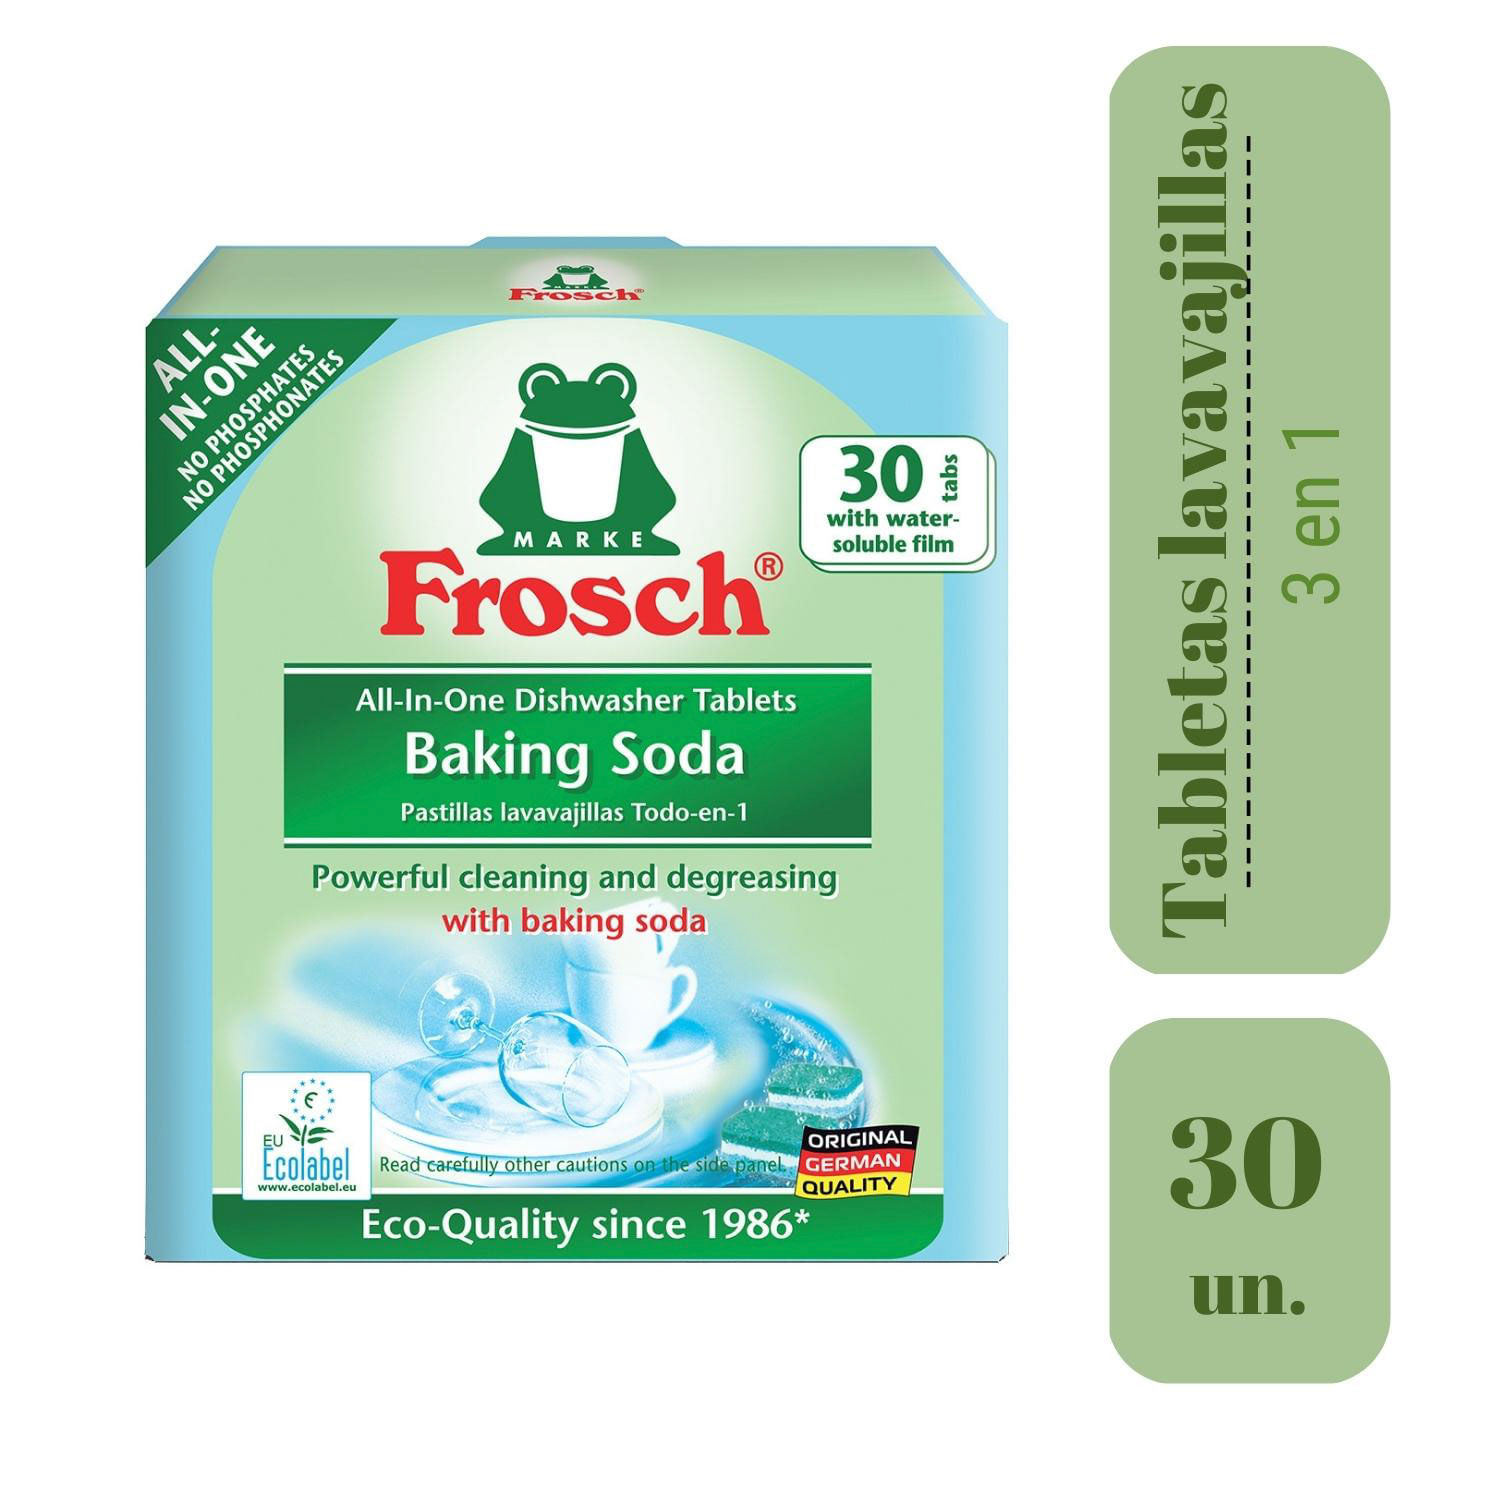 Detergente lavavajillas Cascade Platinum Fresh, 48 cápsulas